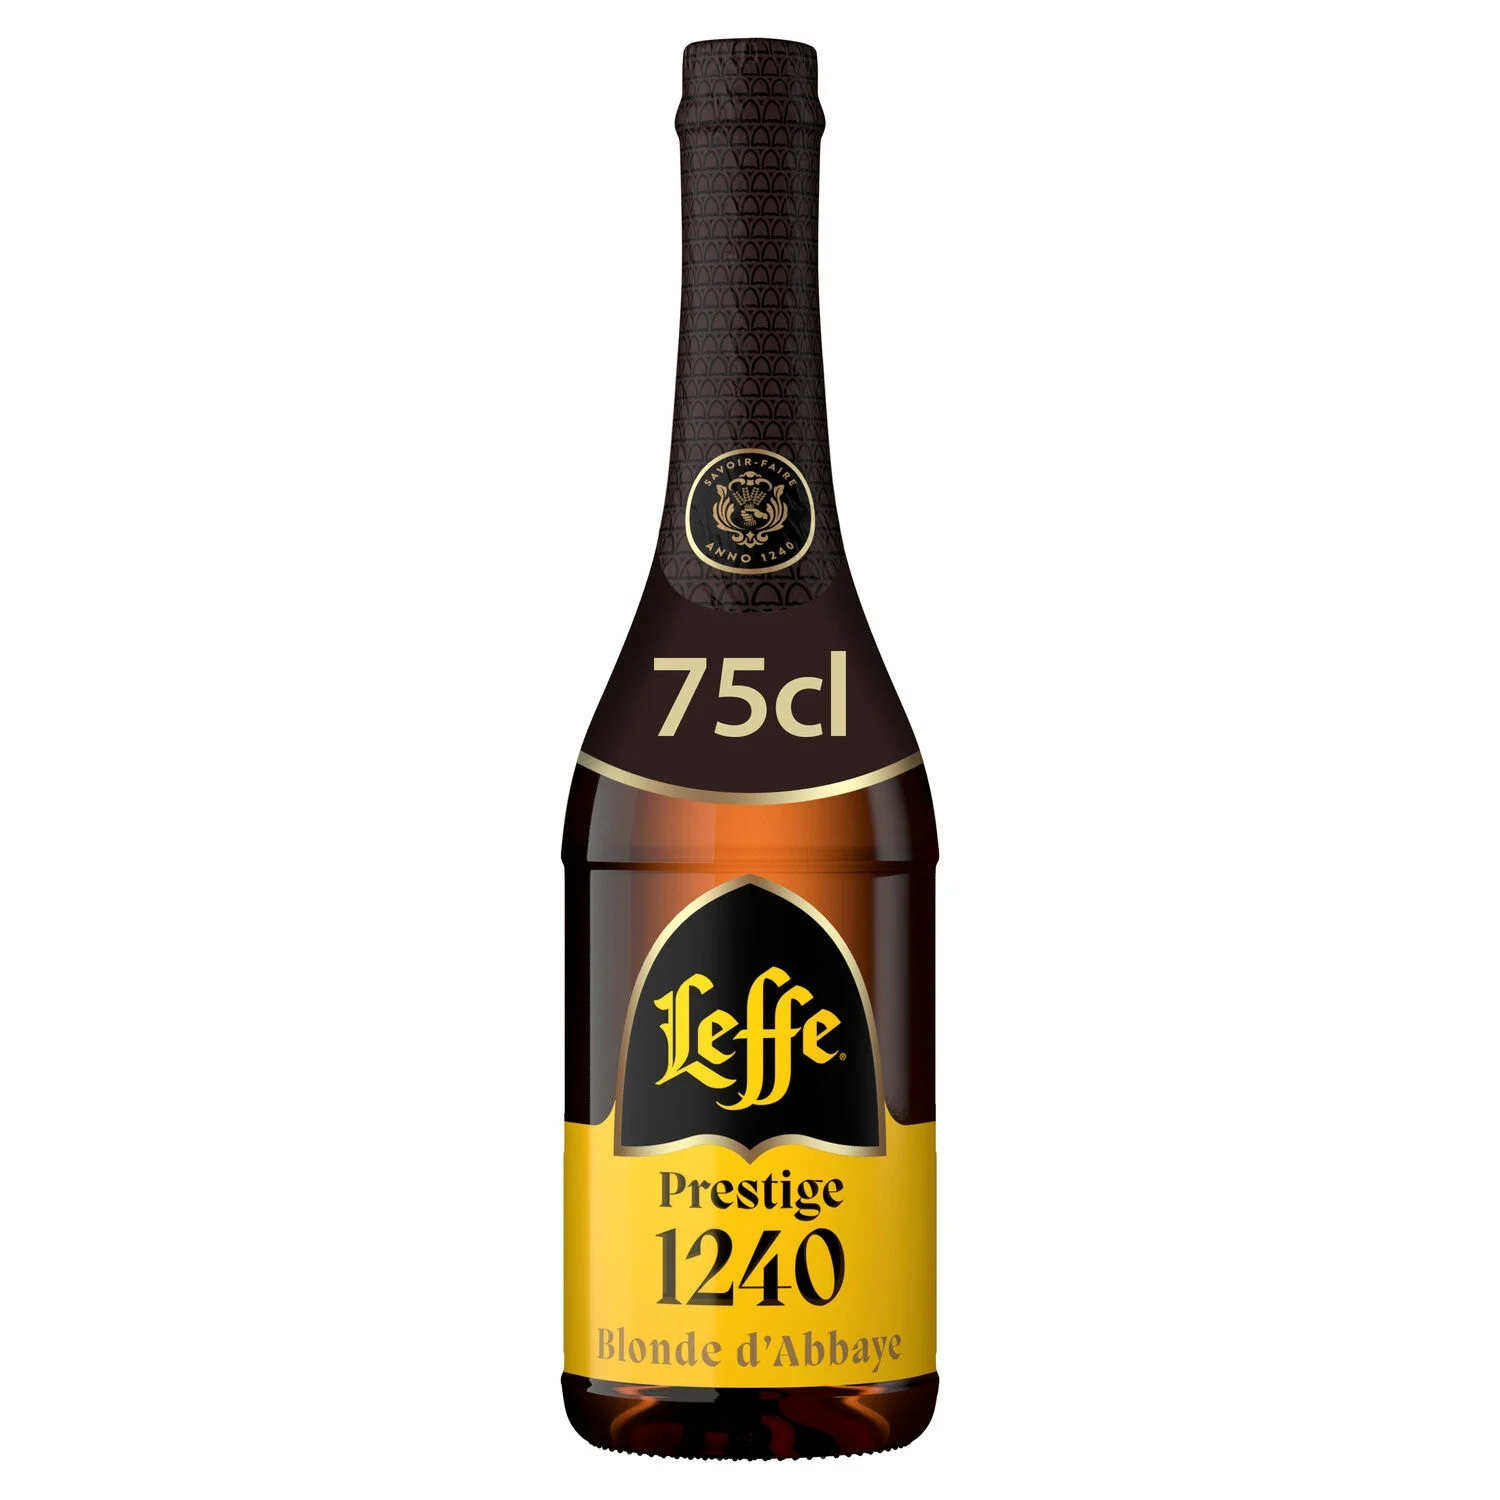 Bière Blonde D'abbayeprestige 75cl 8,5% -leffe